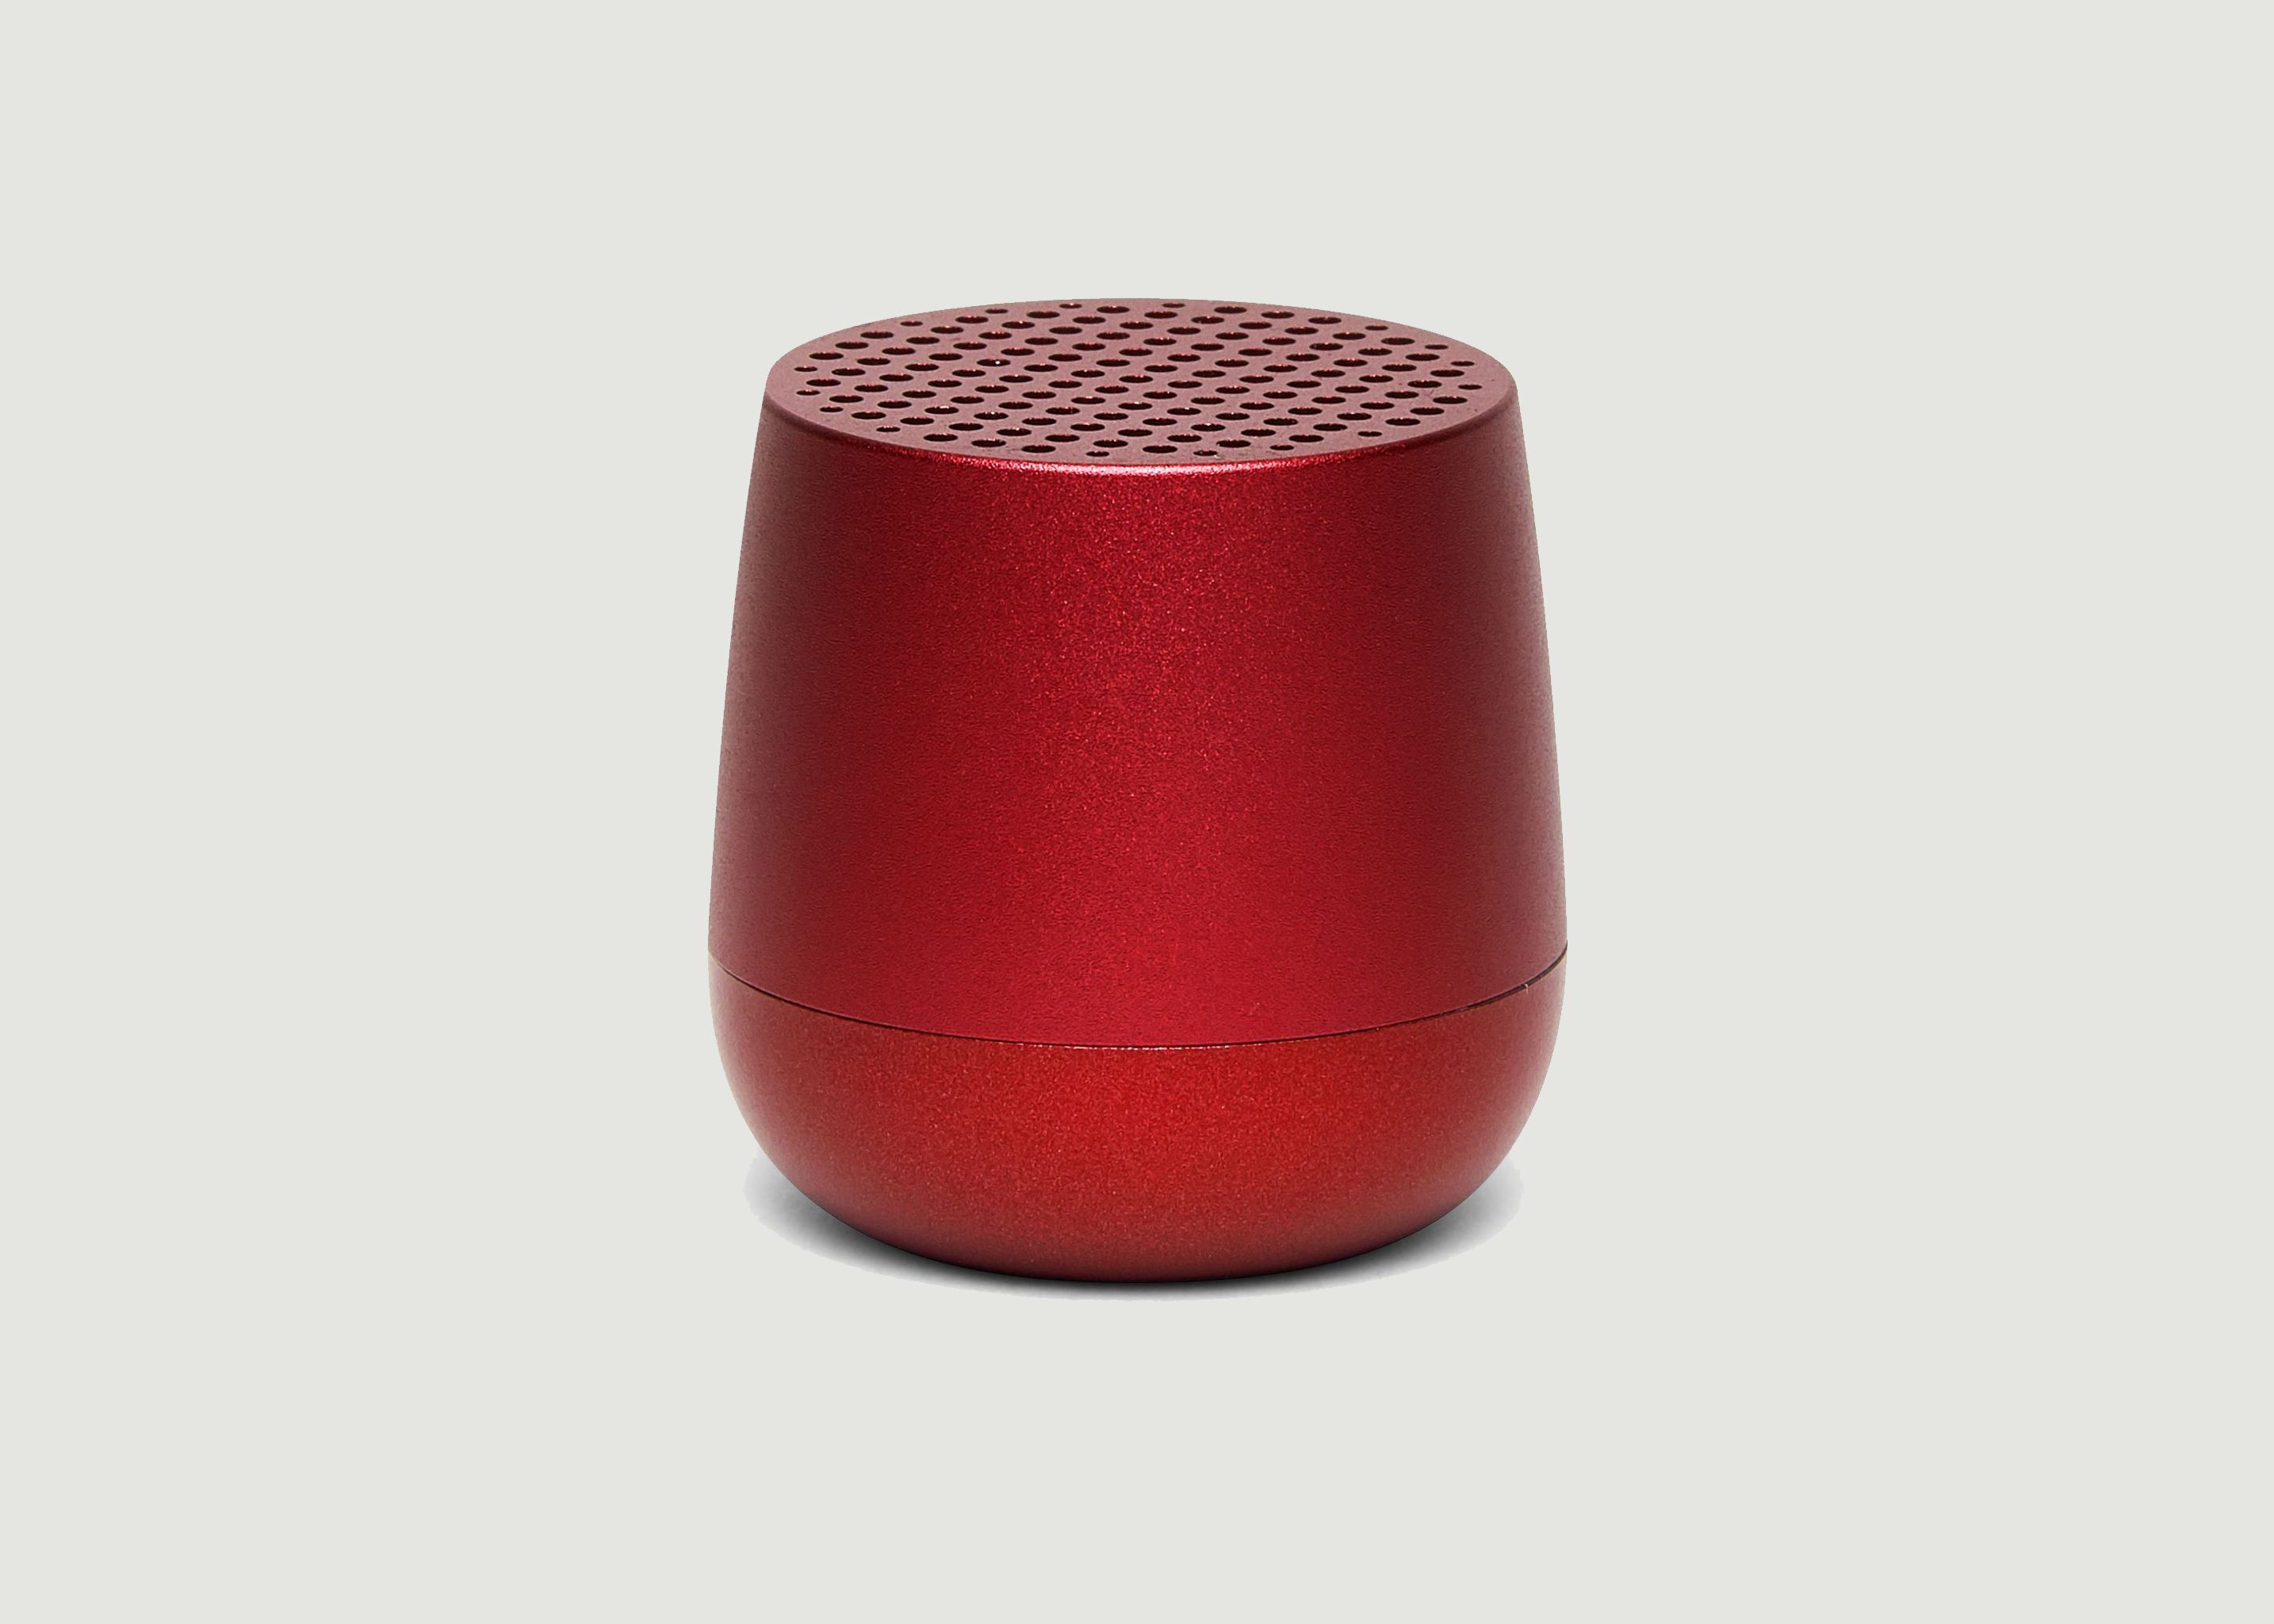 Mino Bluetooth Mini Speaker - Lexon Design